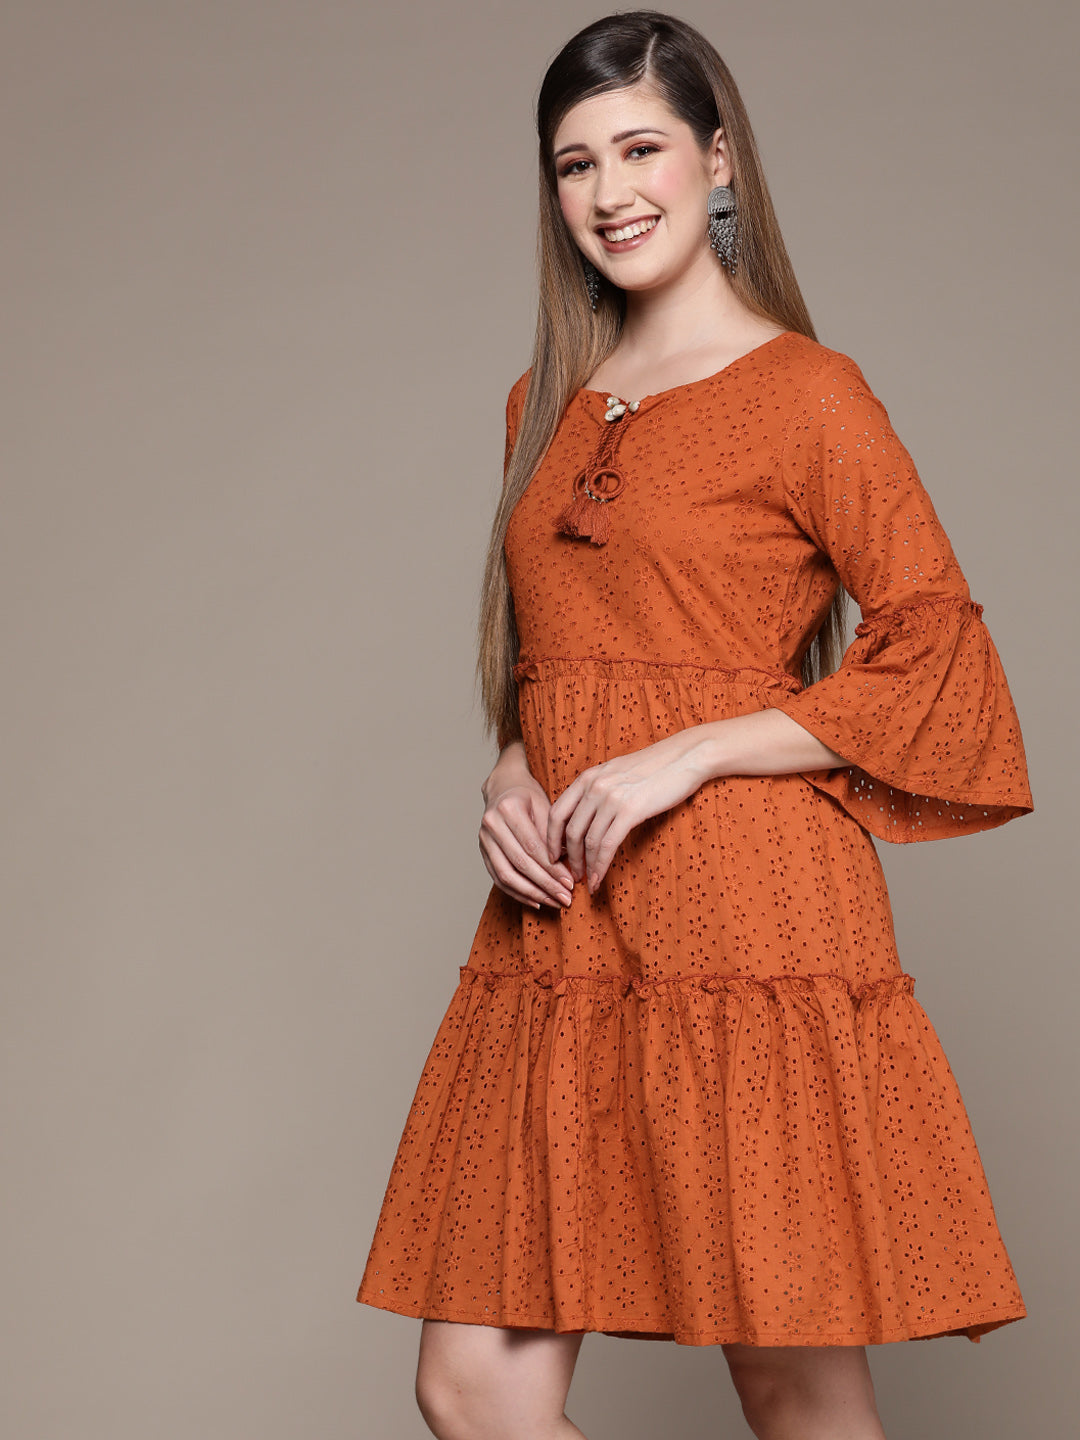 Ishin Women's Orange Schiffli Tiered Dress